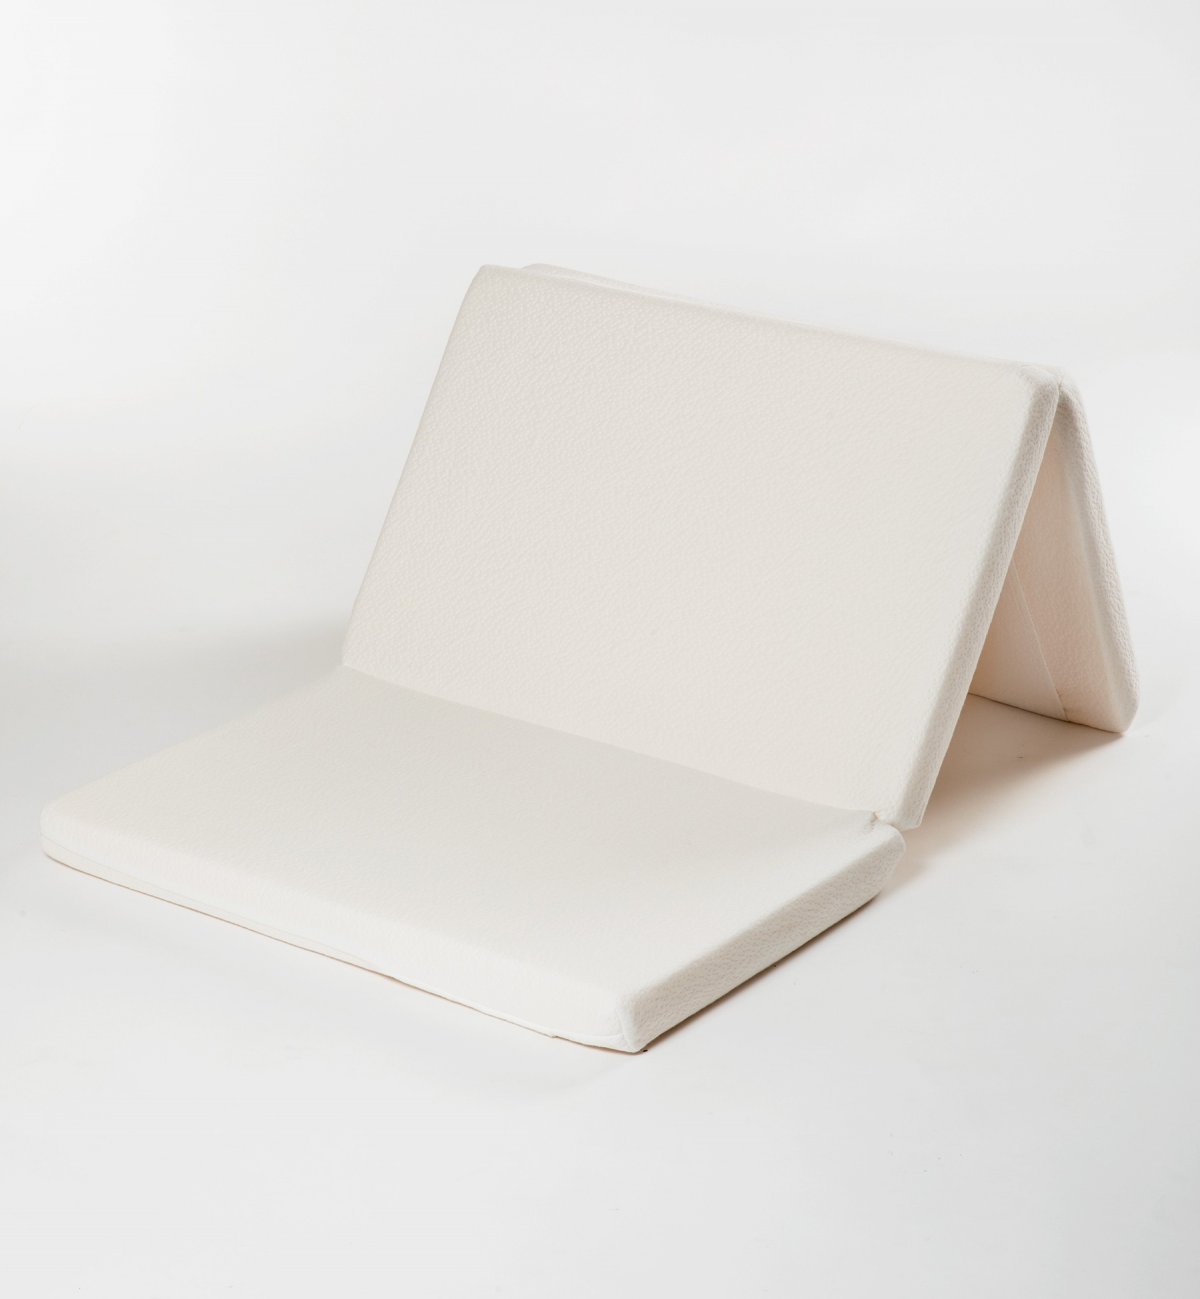 Foldable baby travel mat with Aloe Vera cover - Kadolis